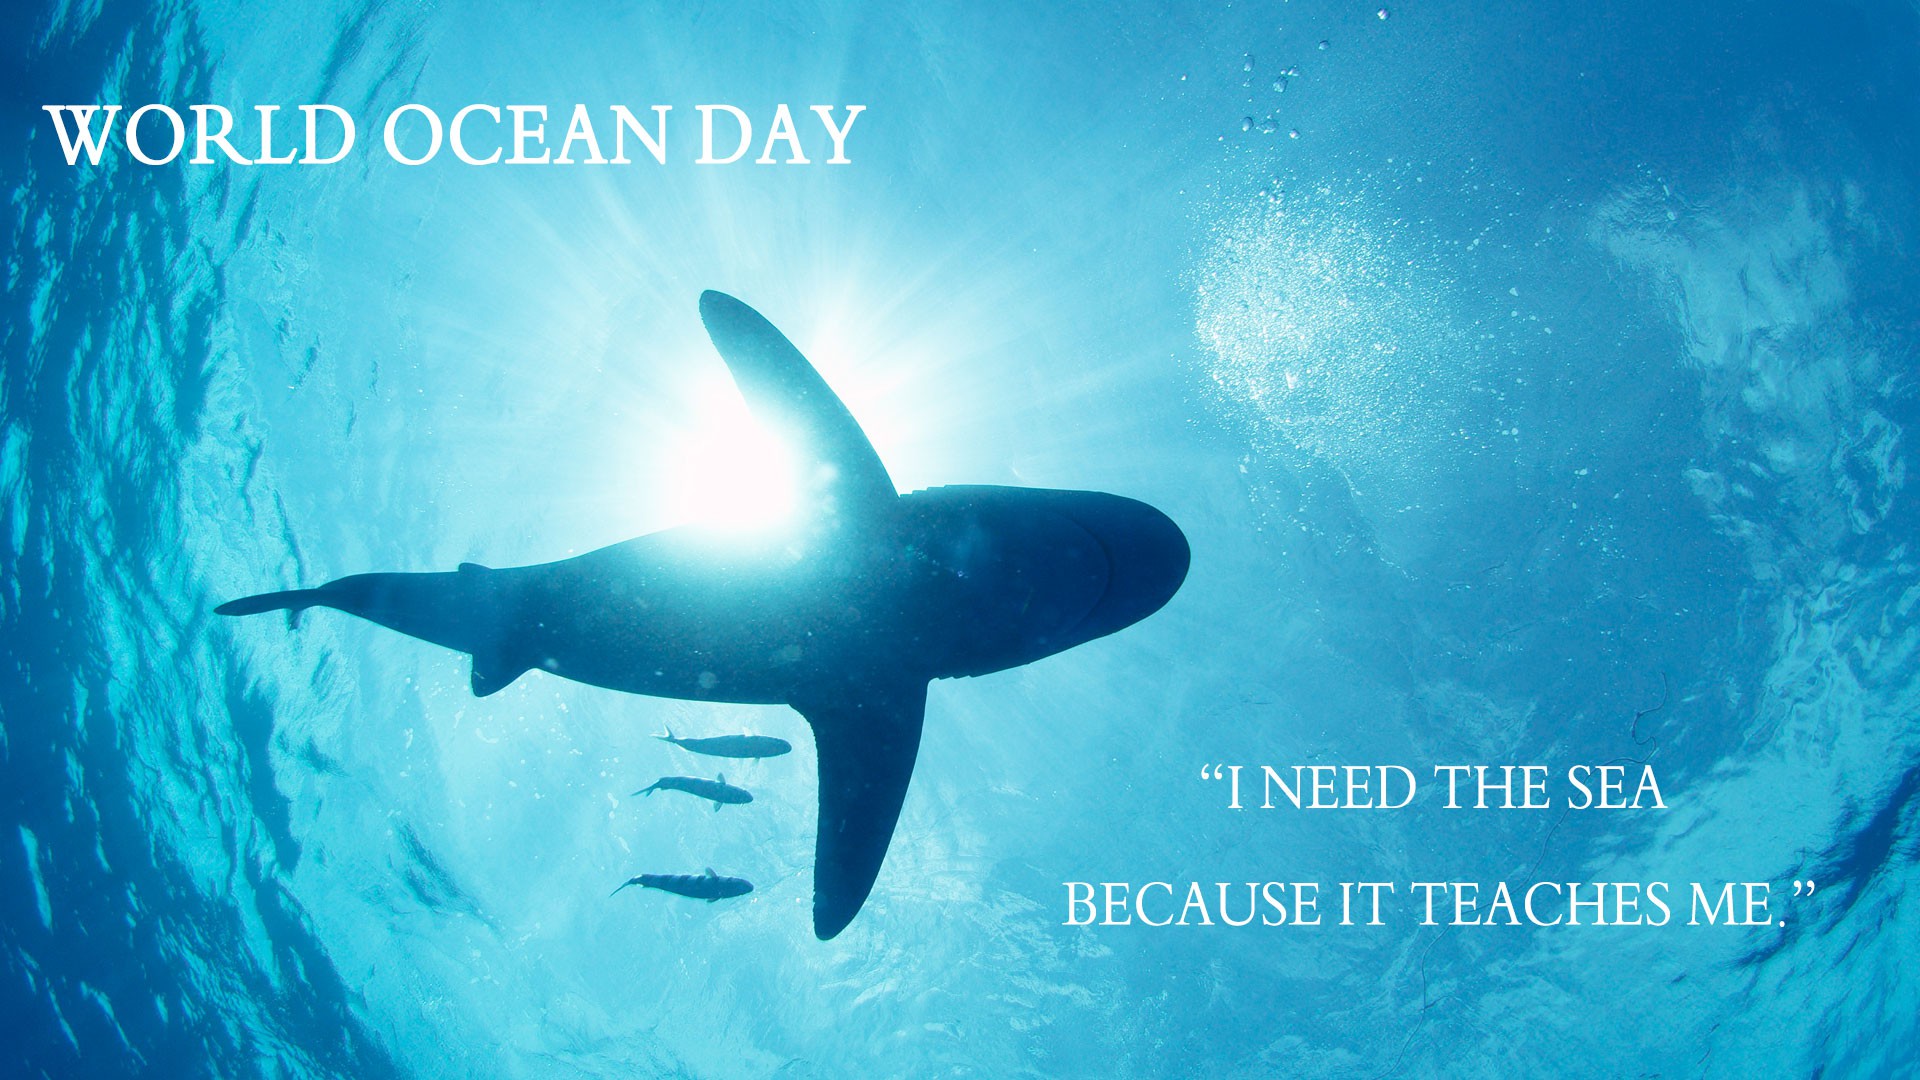 World Ocean Day Quotes Messages Slogans in Hindi - विश्व महासागर दिवस 8 June, world ocean day theme 2020, विश्व महासागरीय दिवस, वर्ल्ड ओसन्स डे क्या है ?